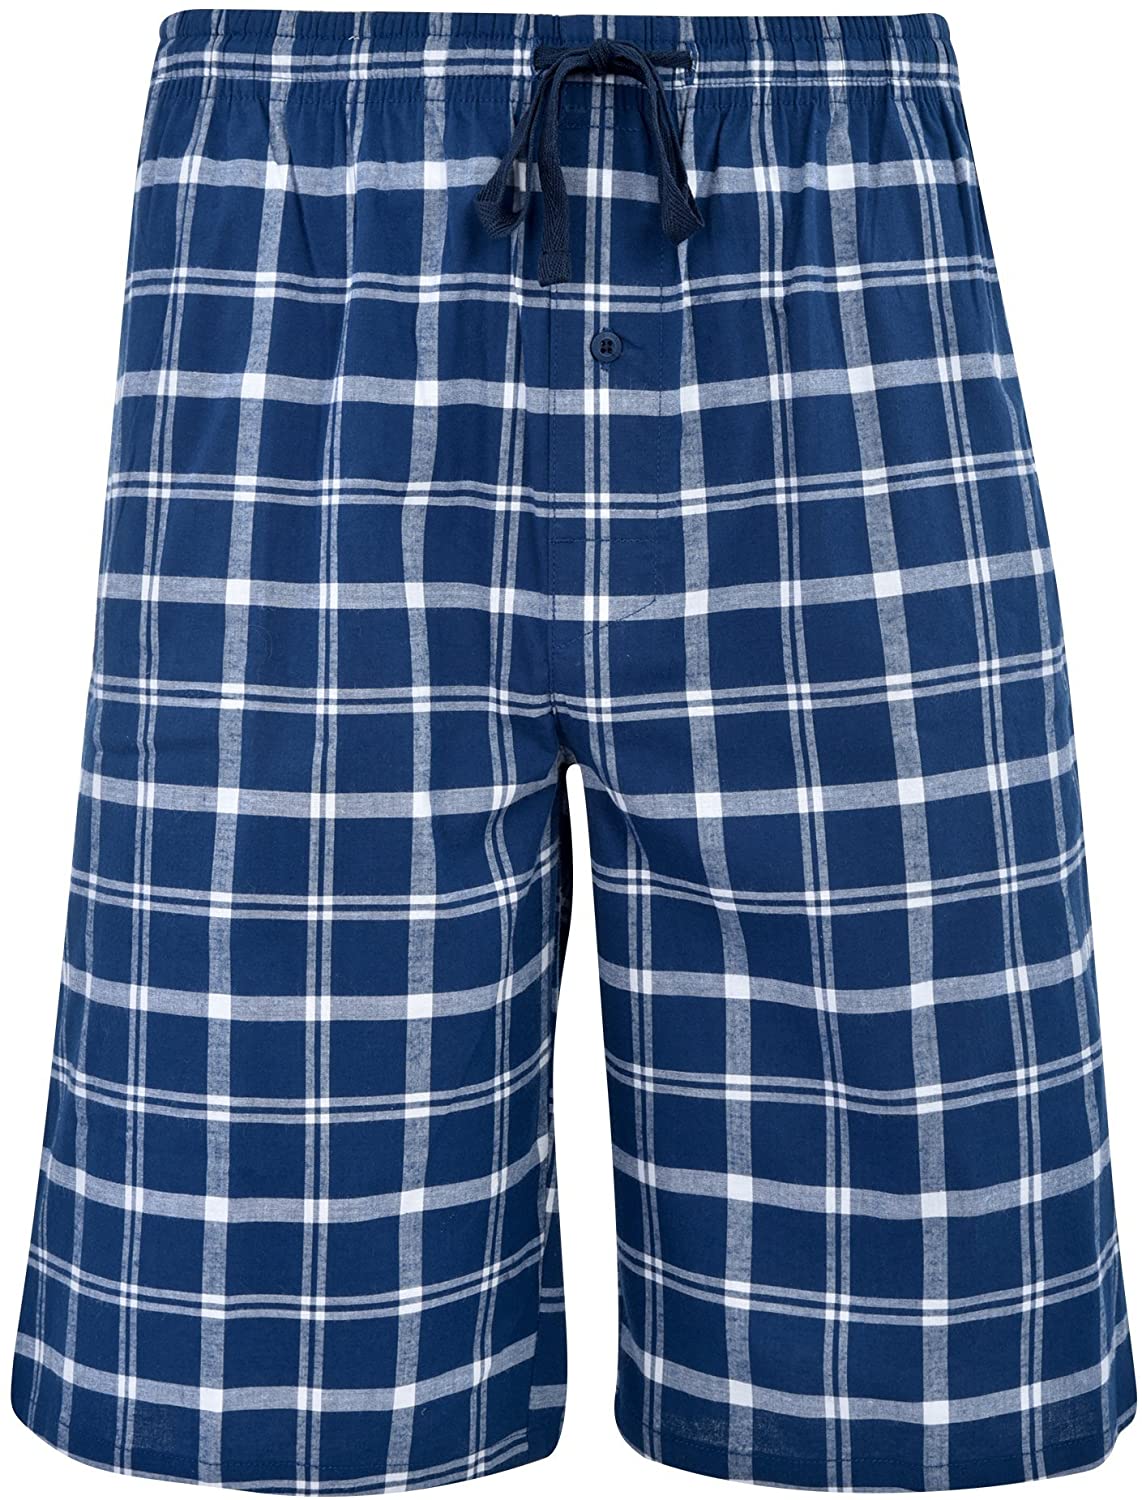 Hanes Men’s & Big Men’s Woven Stretch Pajama Shorts – 2 Pack | eBay